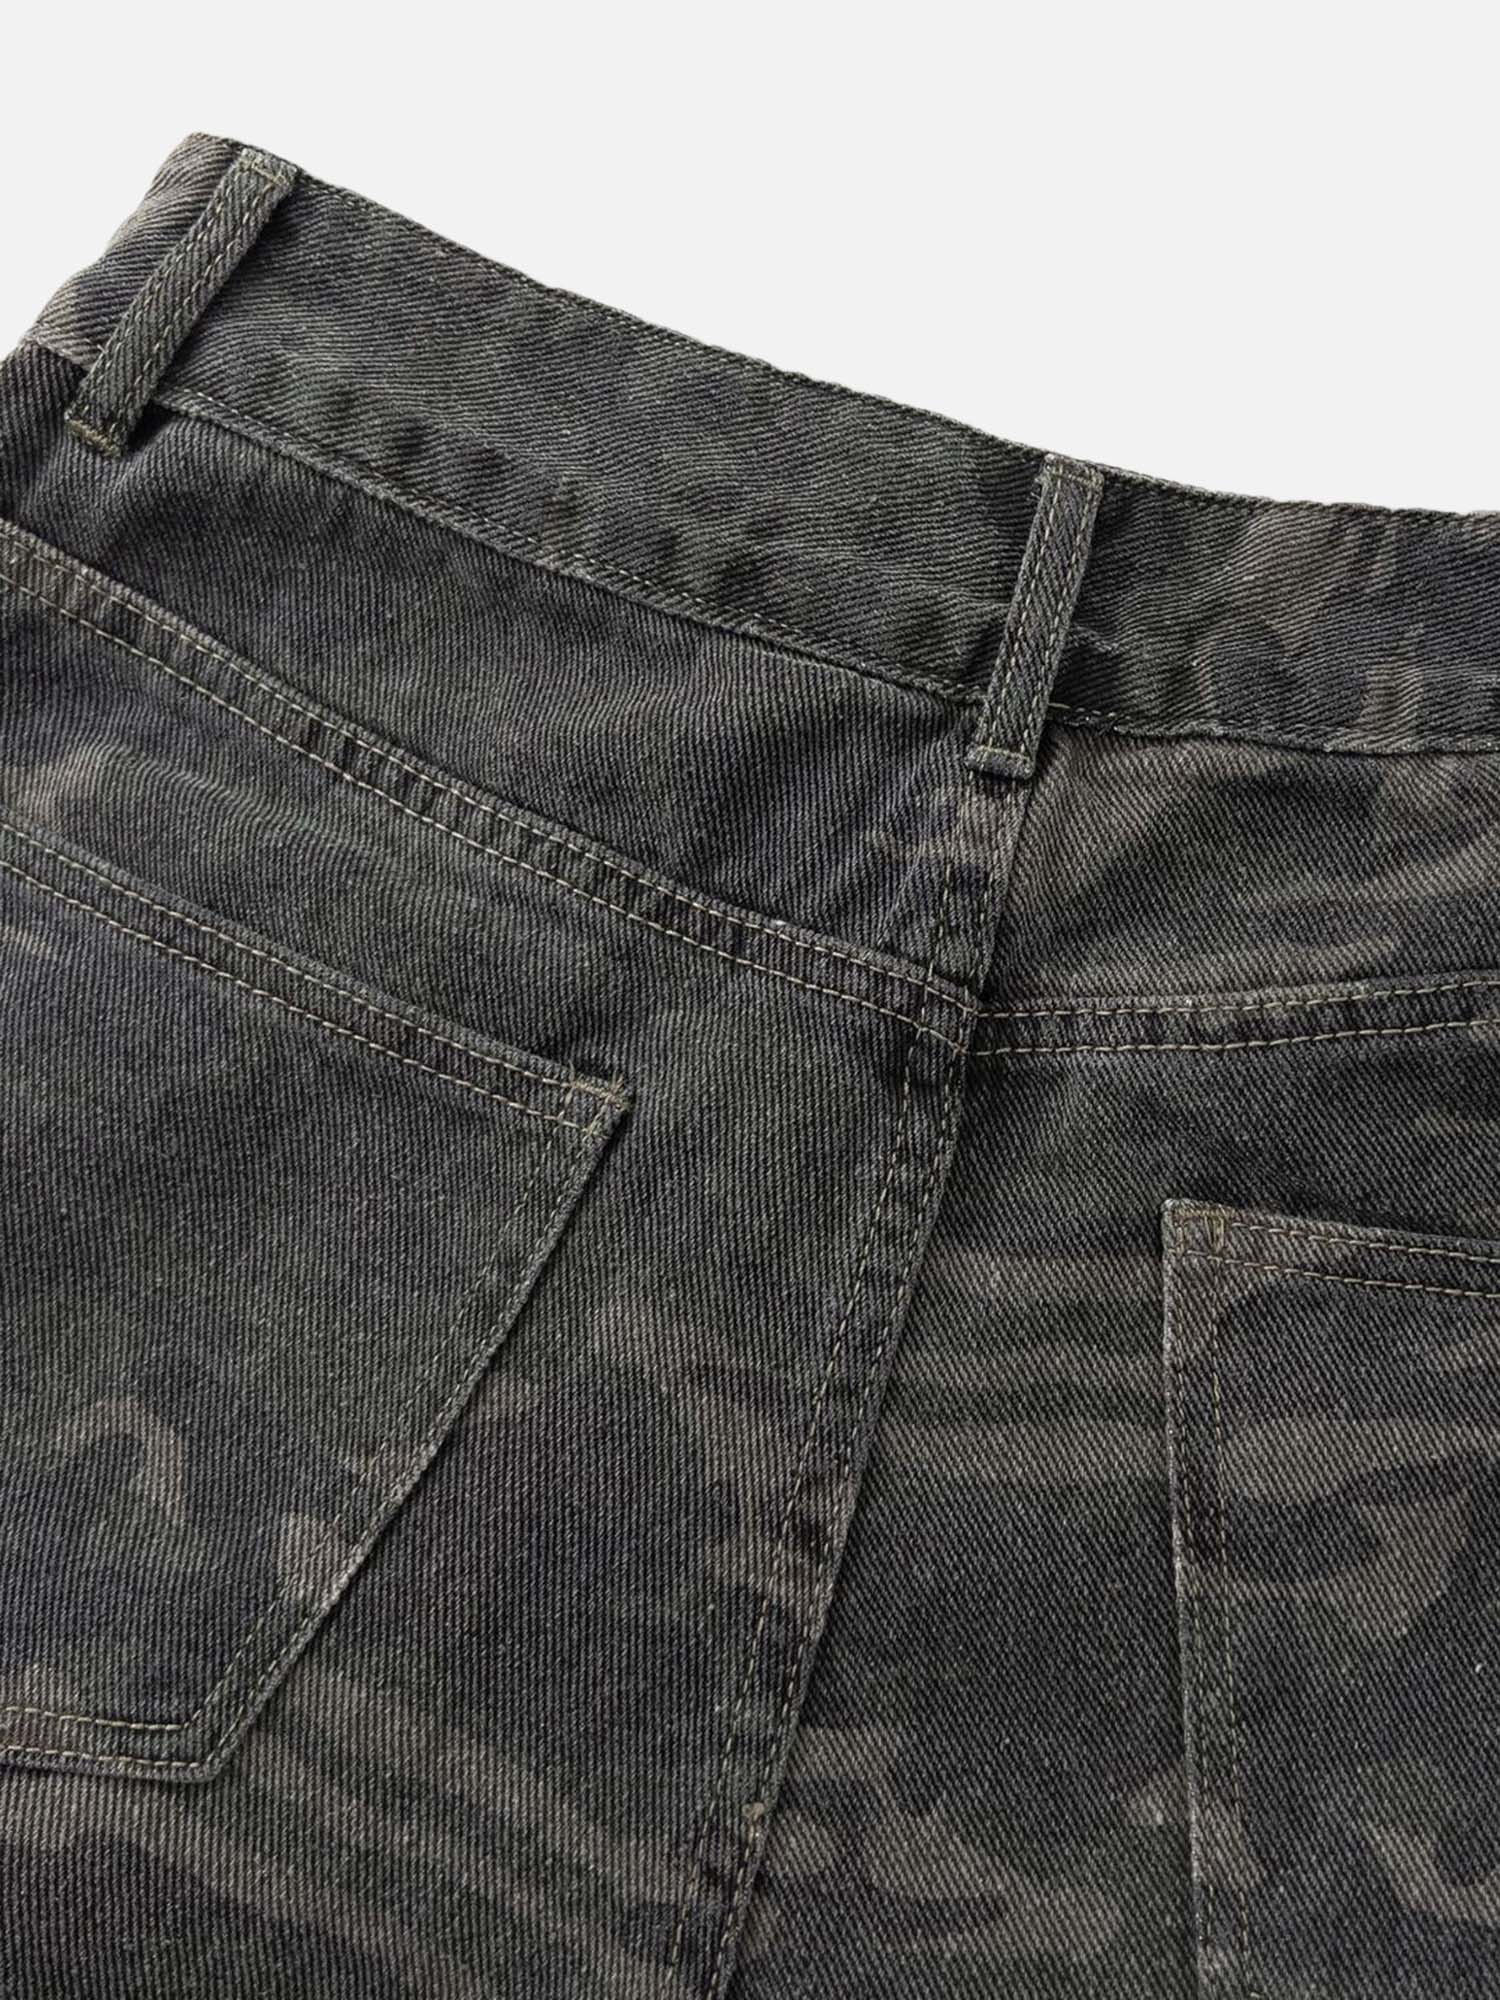 American Street Fashion Heavy Duty Camouflage Work Jeans